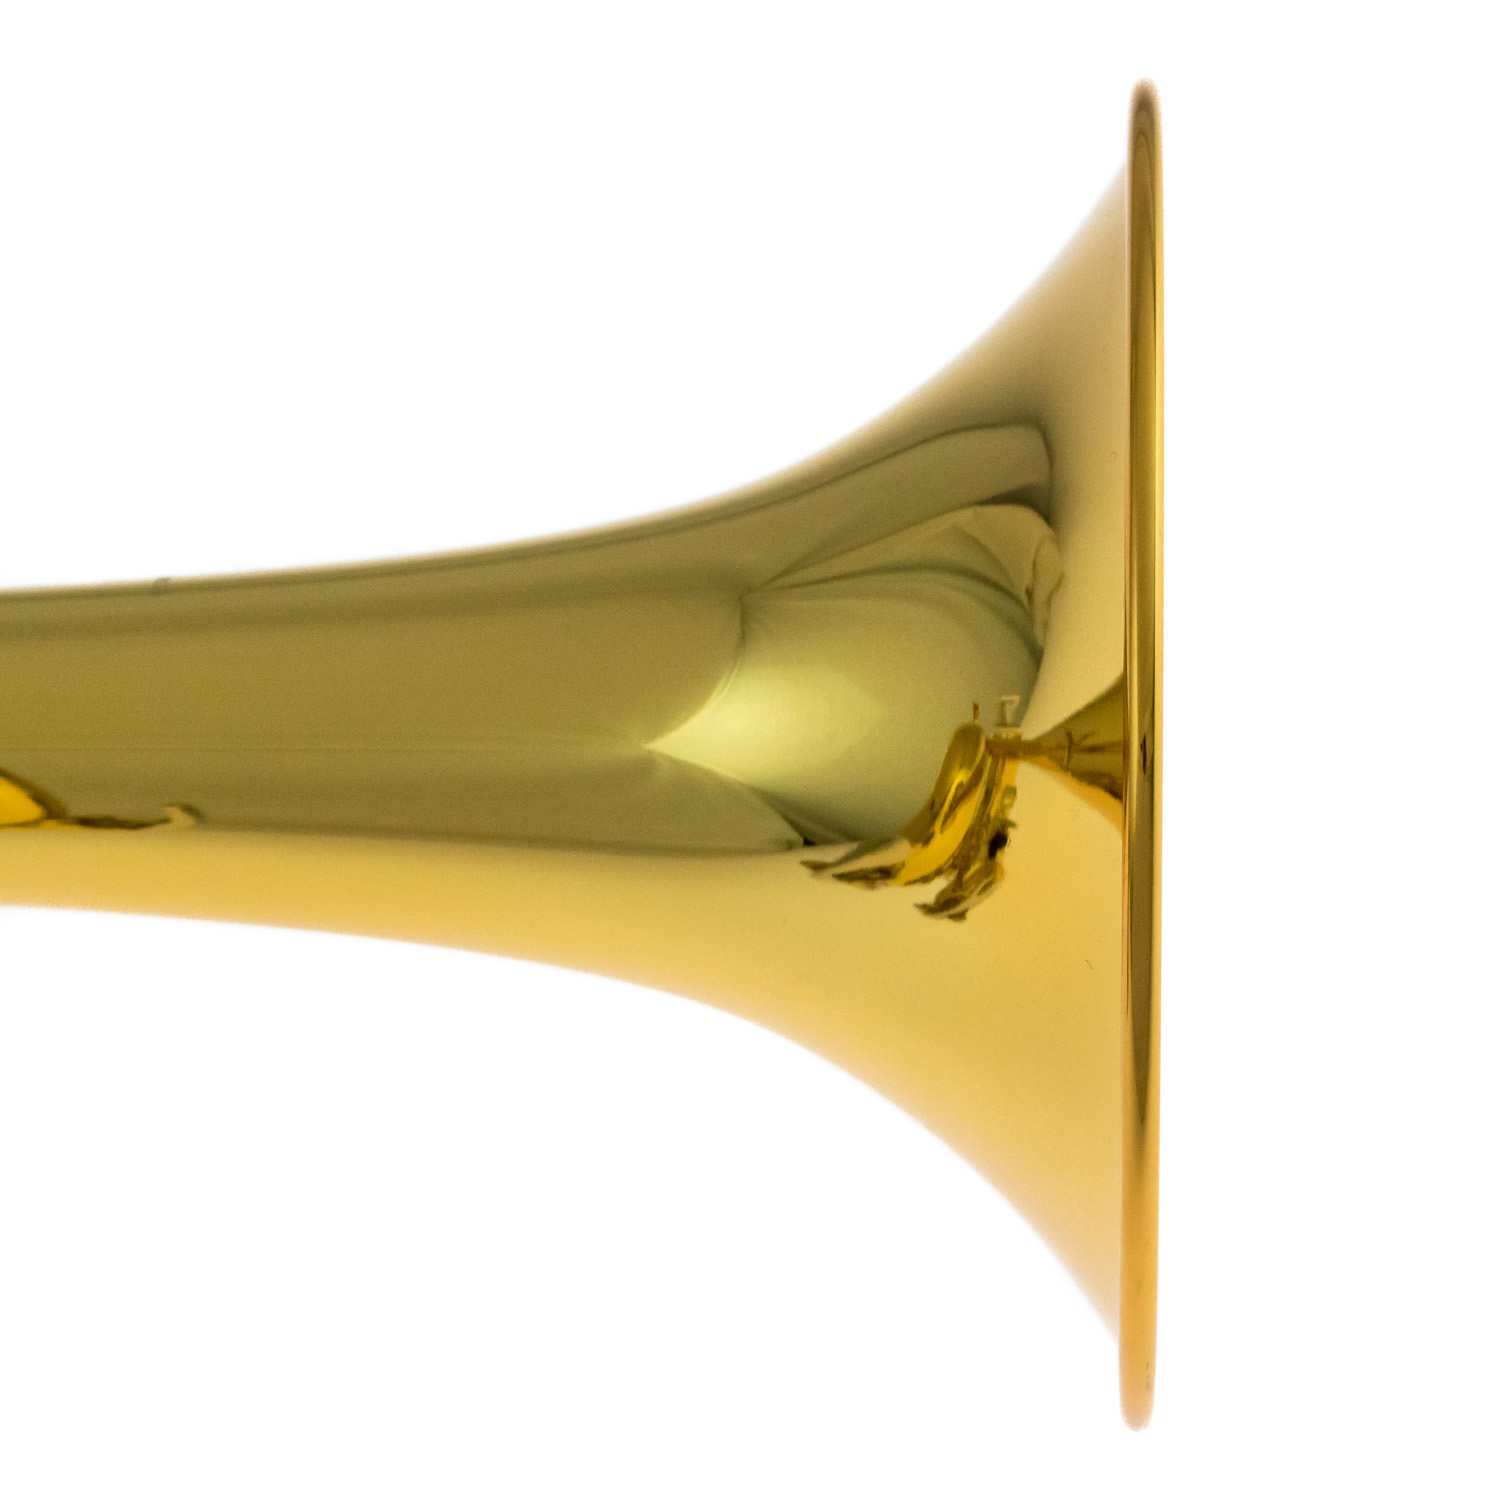 Yamaha Bb Trompet - YTR 3335